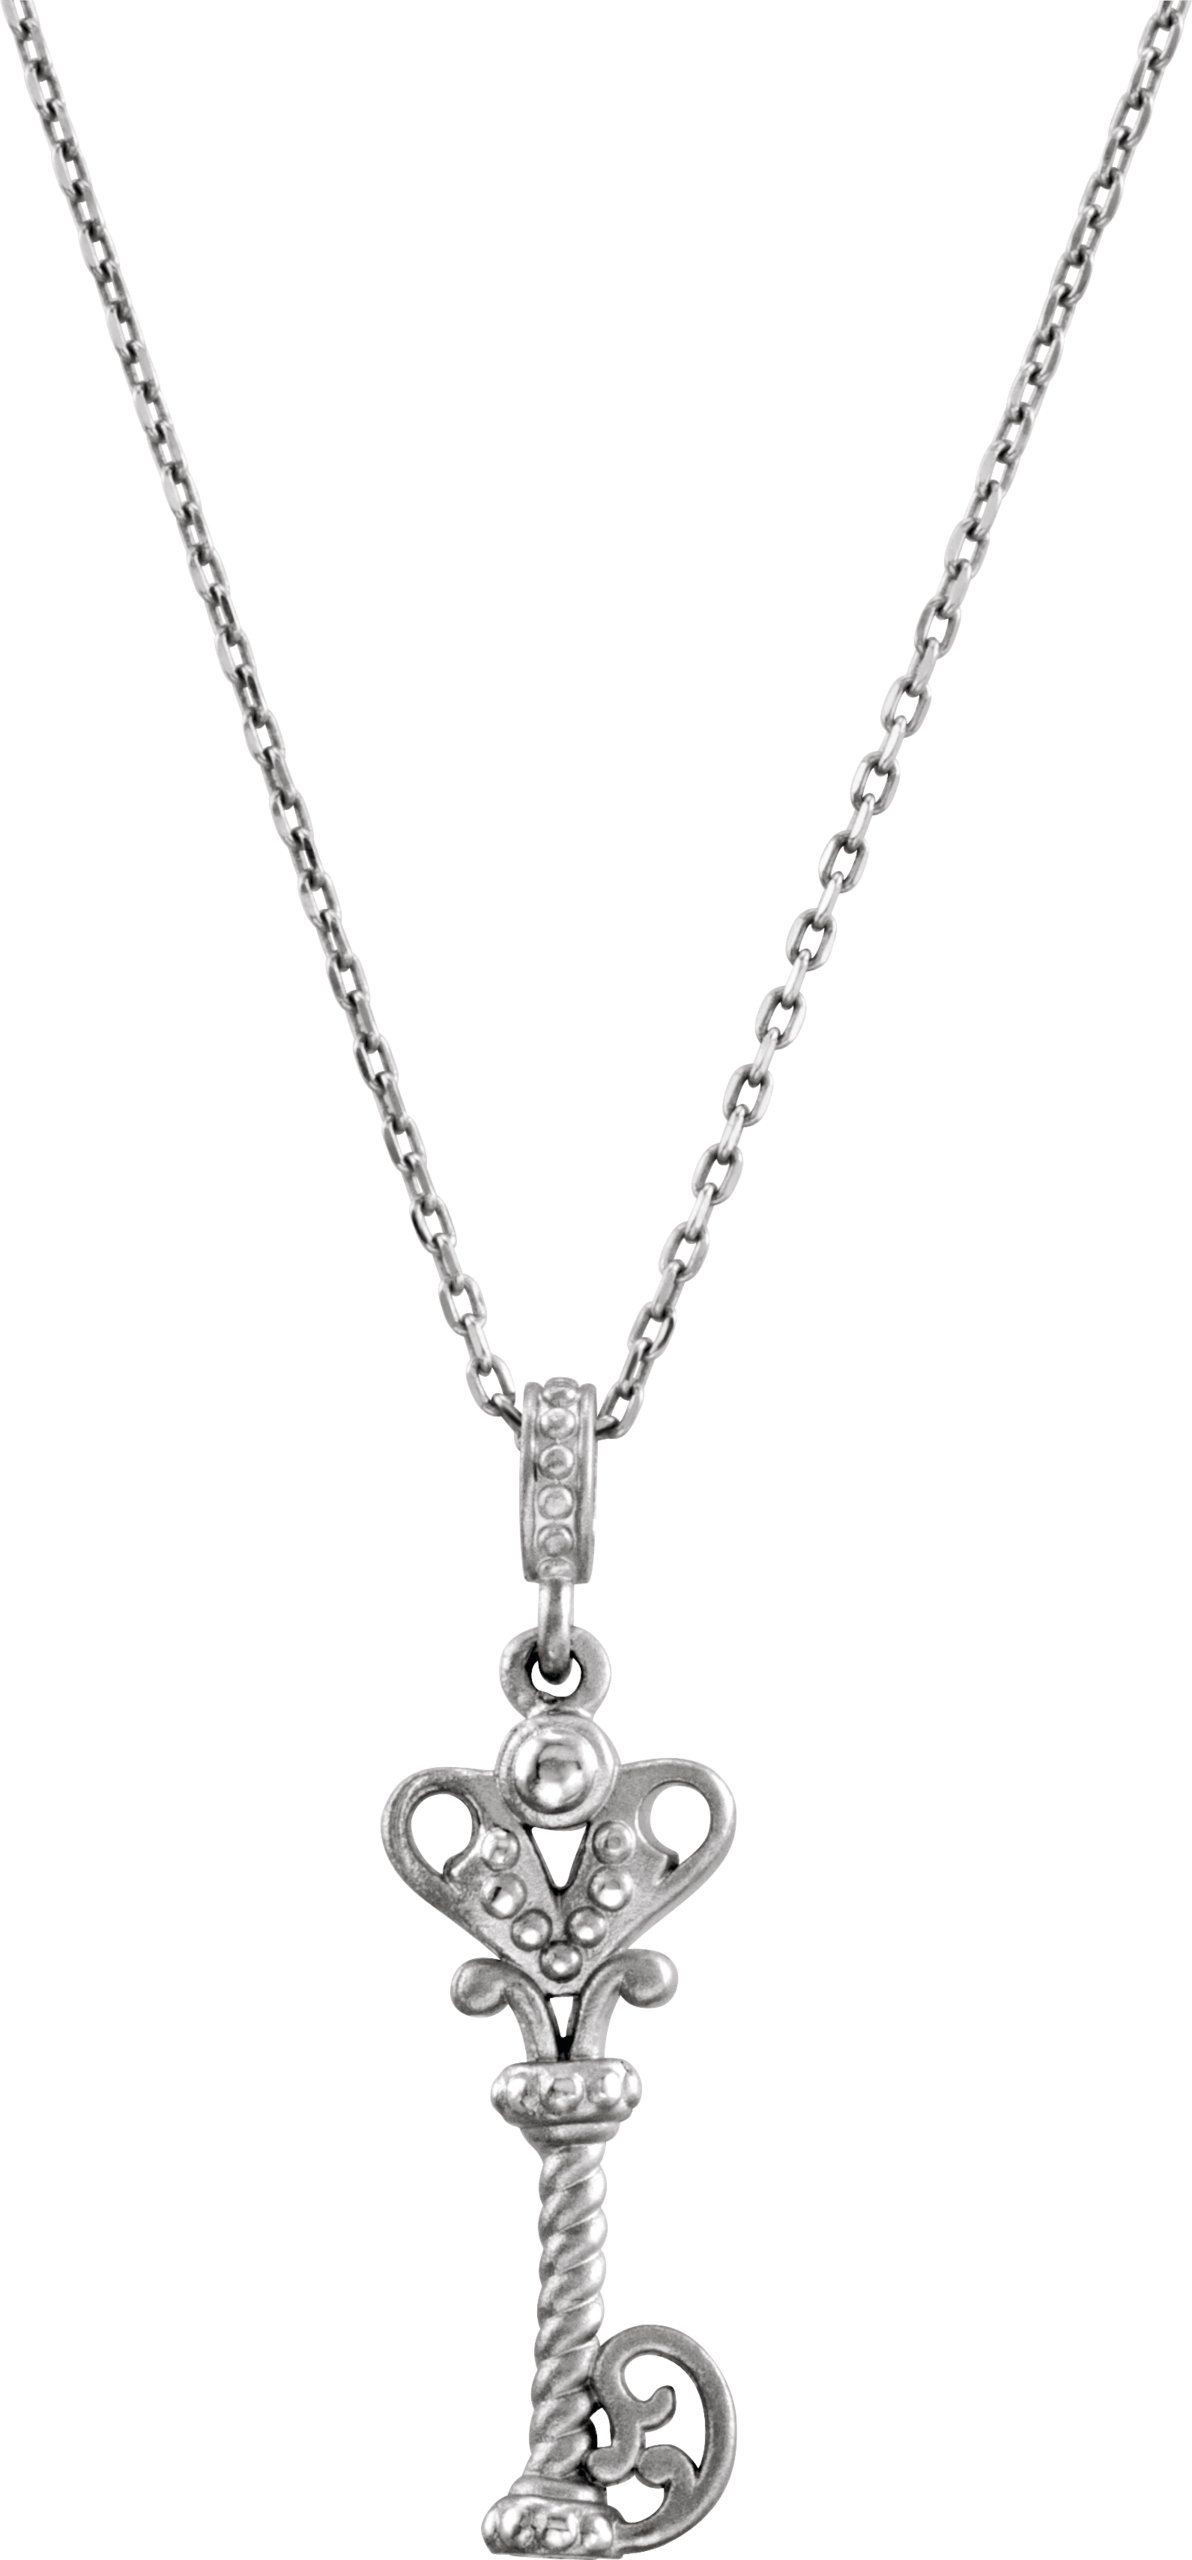 Sterling Silver Vintage-Inspired Key 18" Necklace